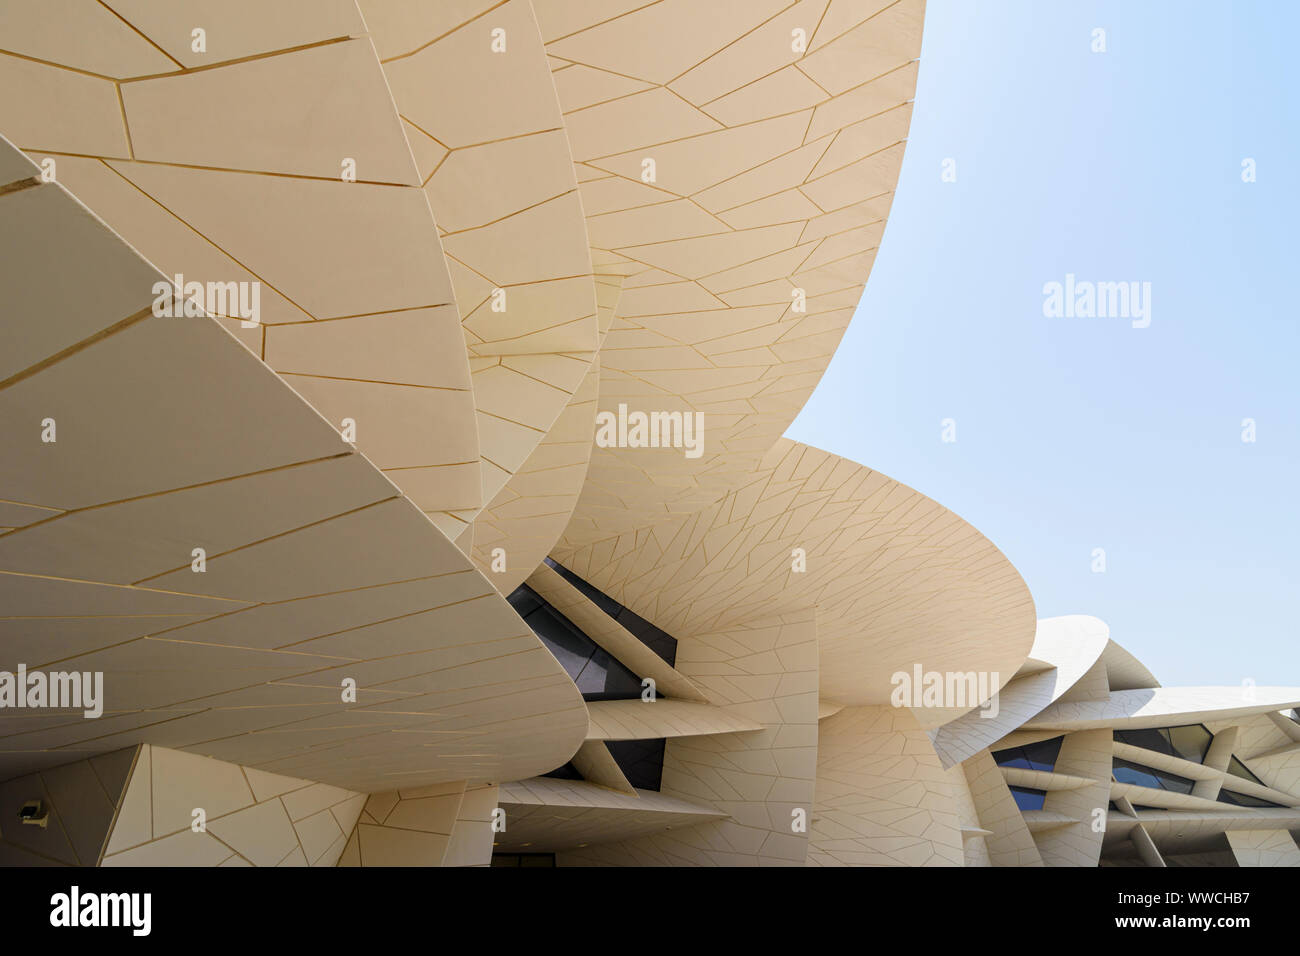 Detail of the desert rose inspired architectural landmark of the National Museum of Qatar, Doha, Qatar Stock Photo